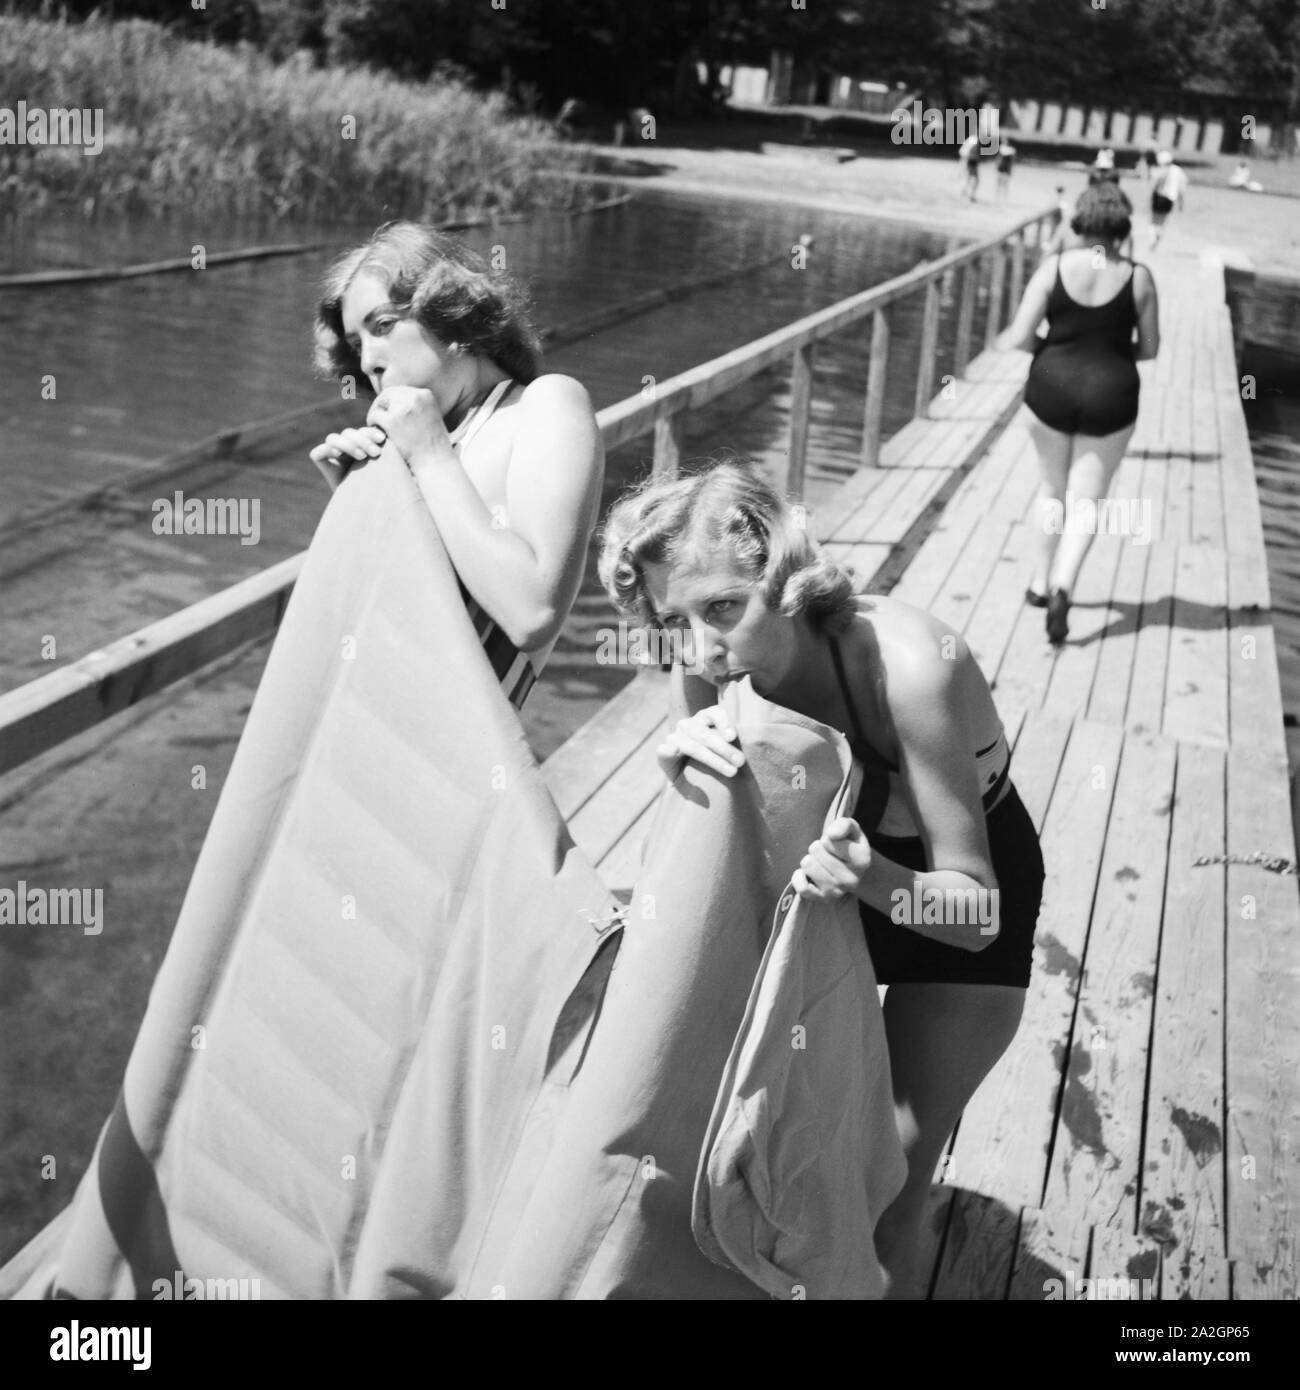 Zwei junge Frauen blasen ihre Luftmatratze une einem Voir in der Wachau in Österreich Deutschland auf, 1930er Jahre. Deux jeunes femmes d'exploser leurs matelas pneumatiques sur un lac dans la région de Wachau en Autriche, l'Allemagne des années 1930. Banque D'Images